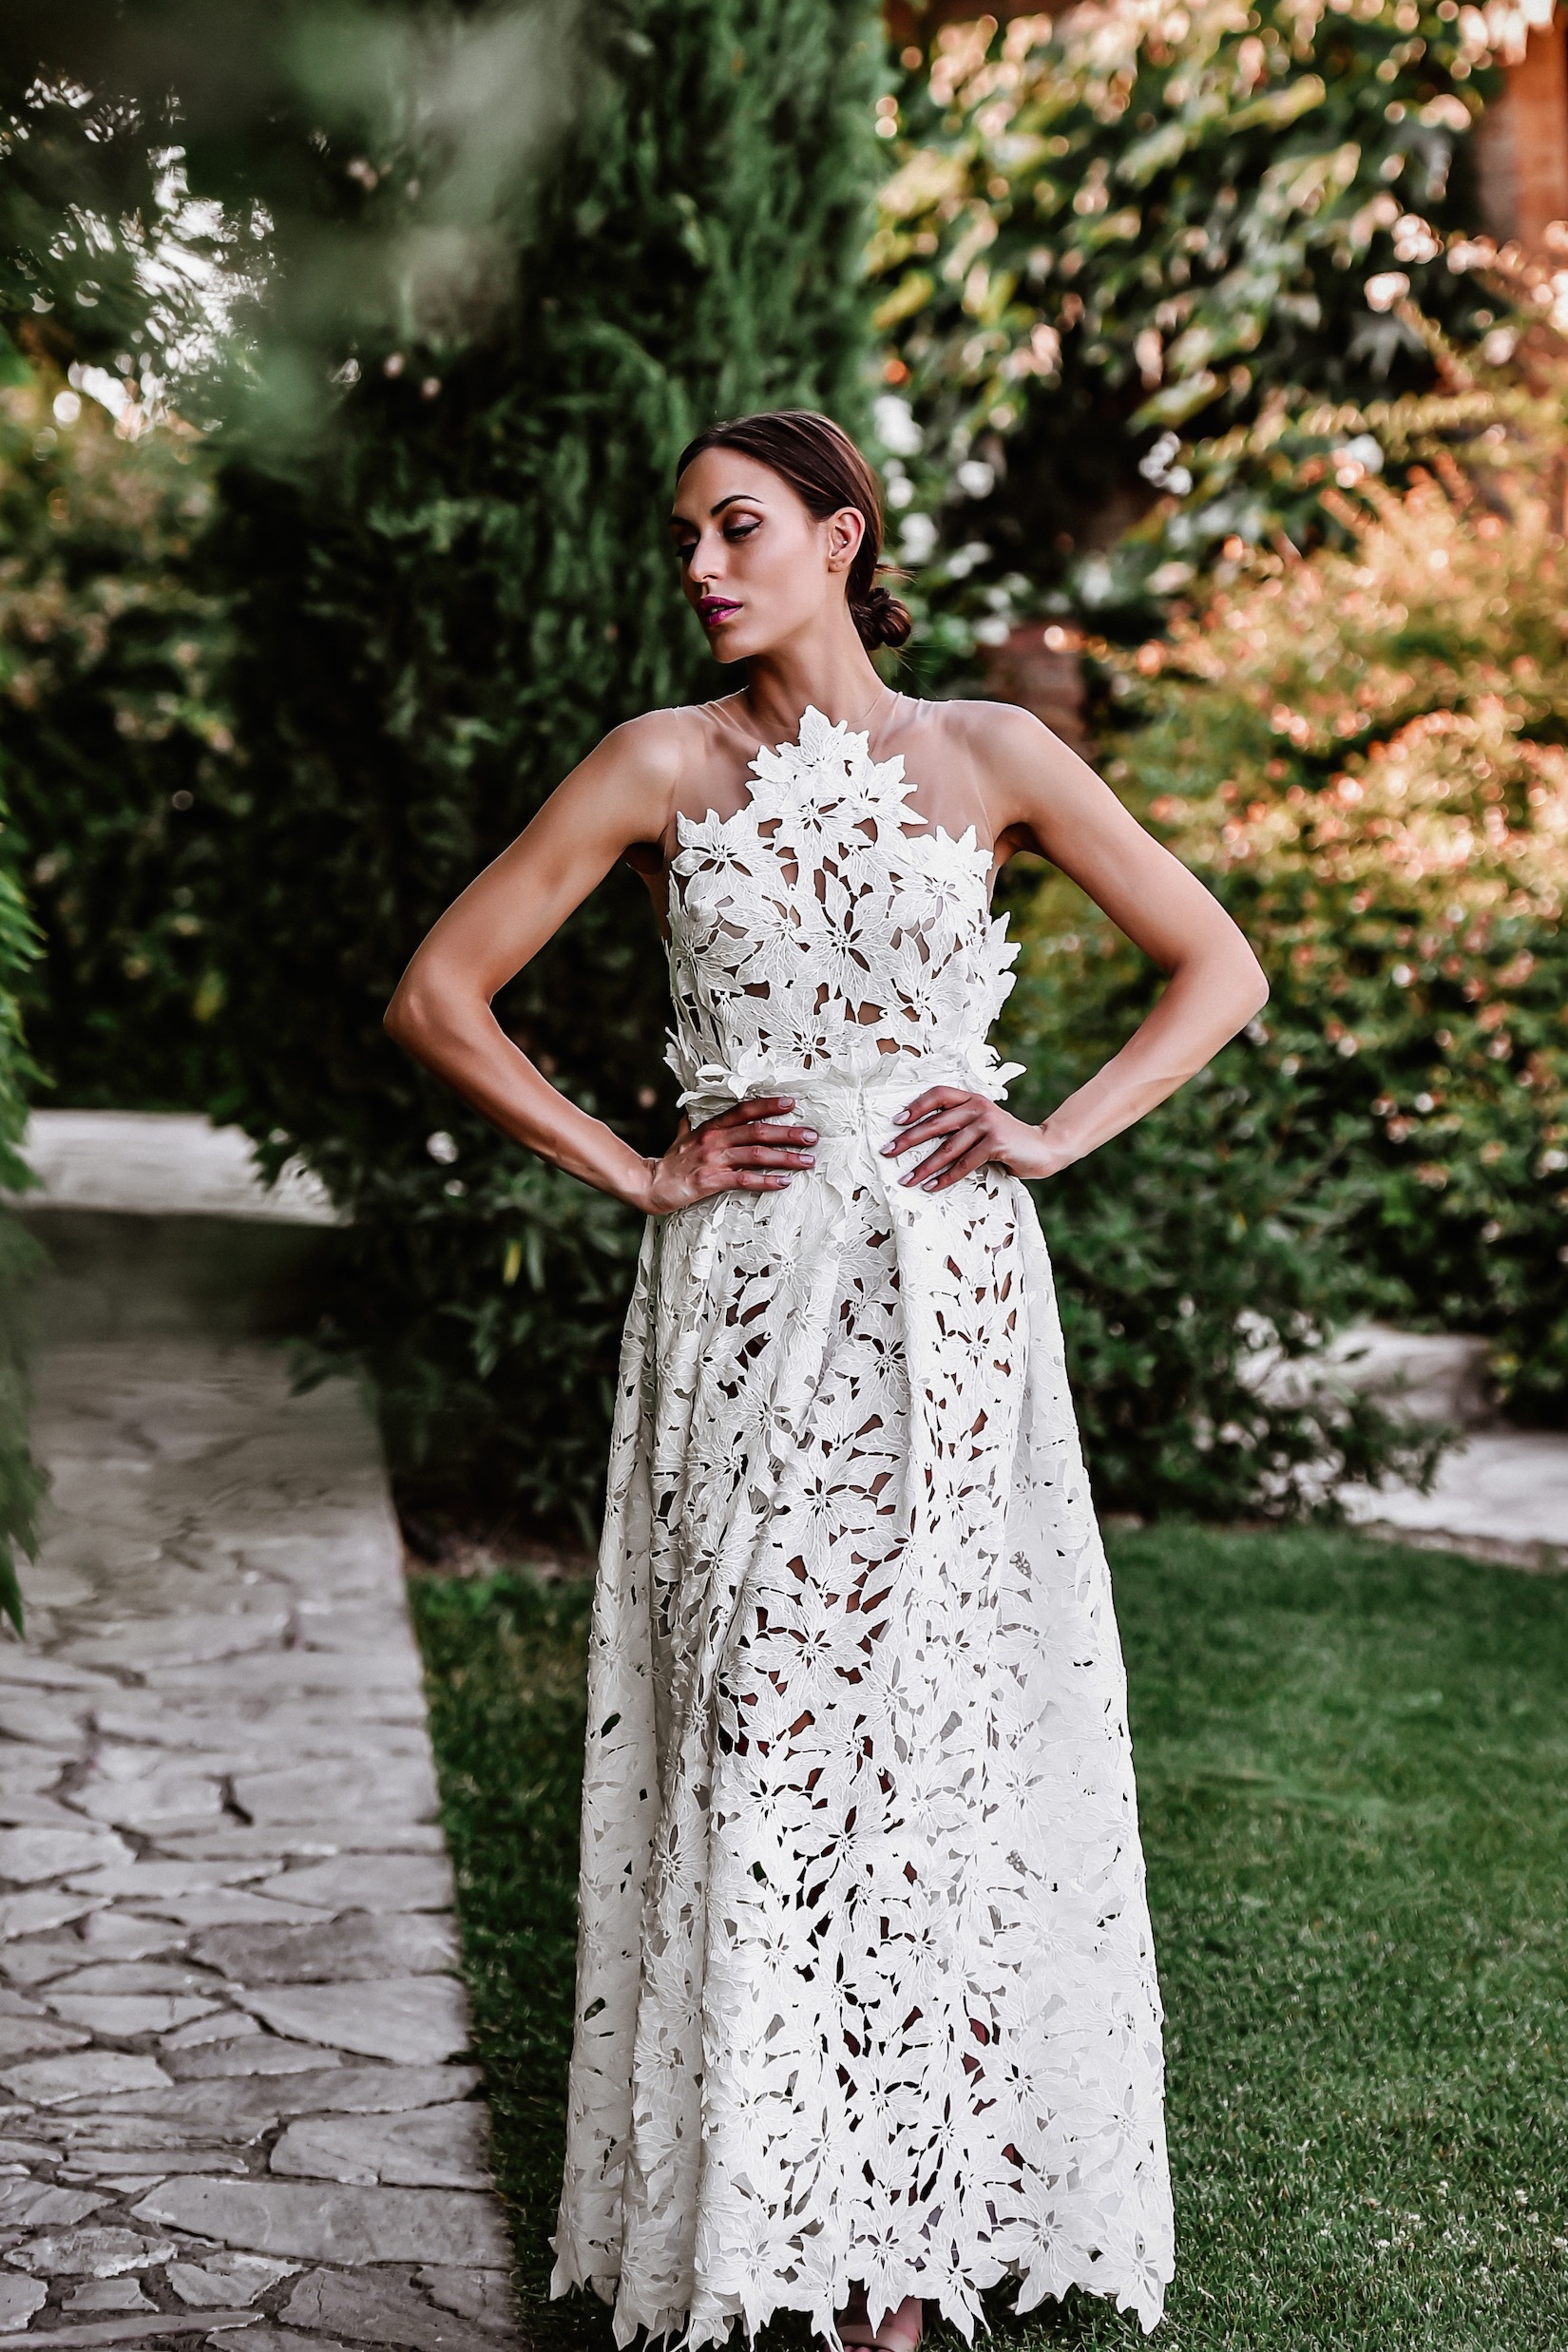 ORSOYA Bridal Dress: Halter neck shilhuette and floral-lace detailing.